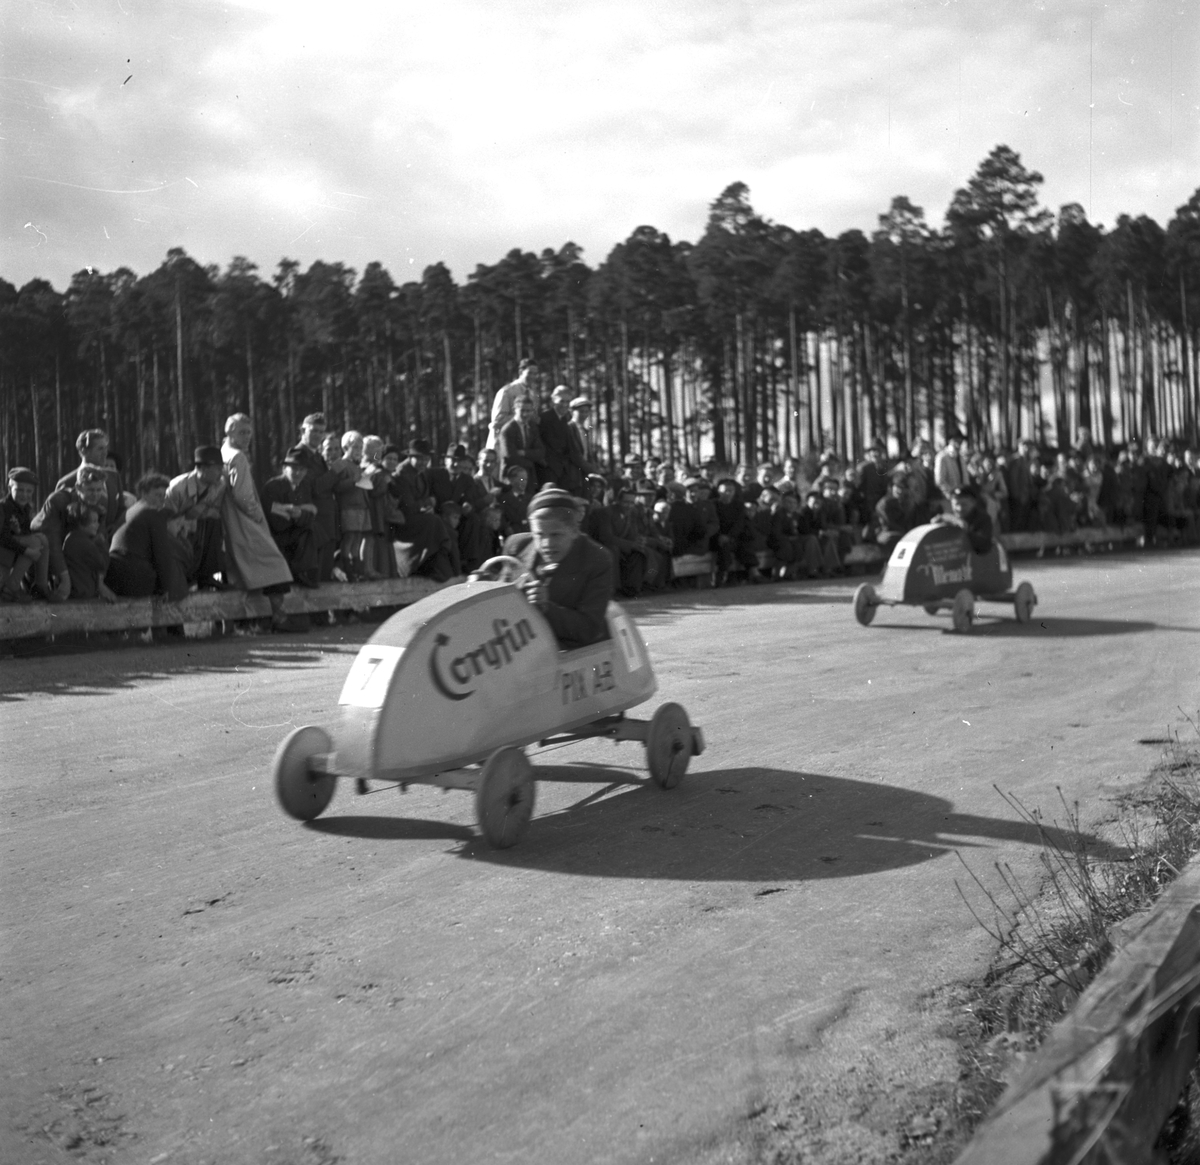 KFUM:s Pojkracertävling. September 1944. Bil nr 7 Coryfin / Pix AB

